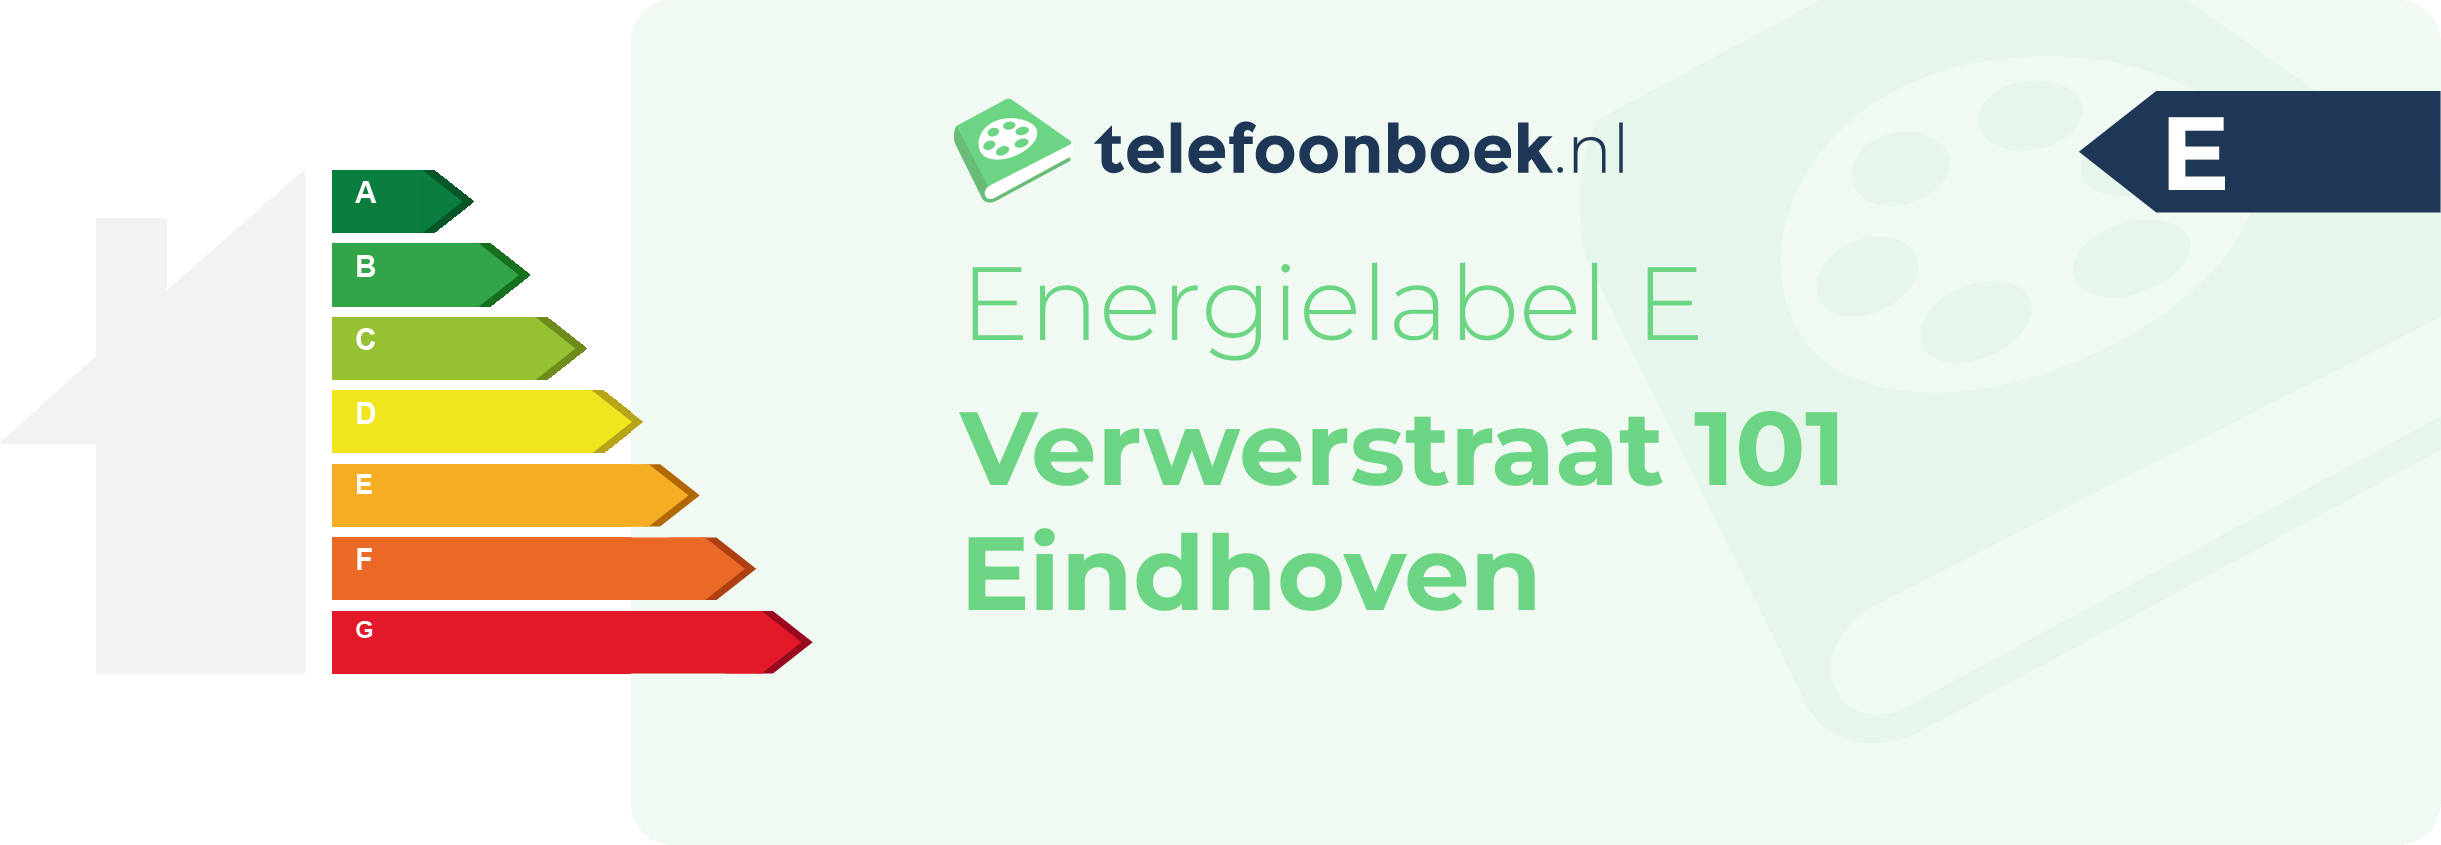 Energielabel Verwerstraat 101 Eindhoven